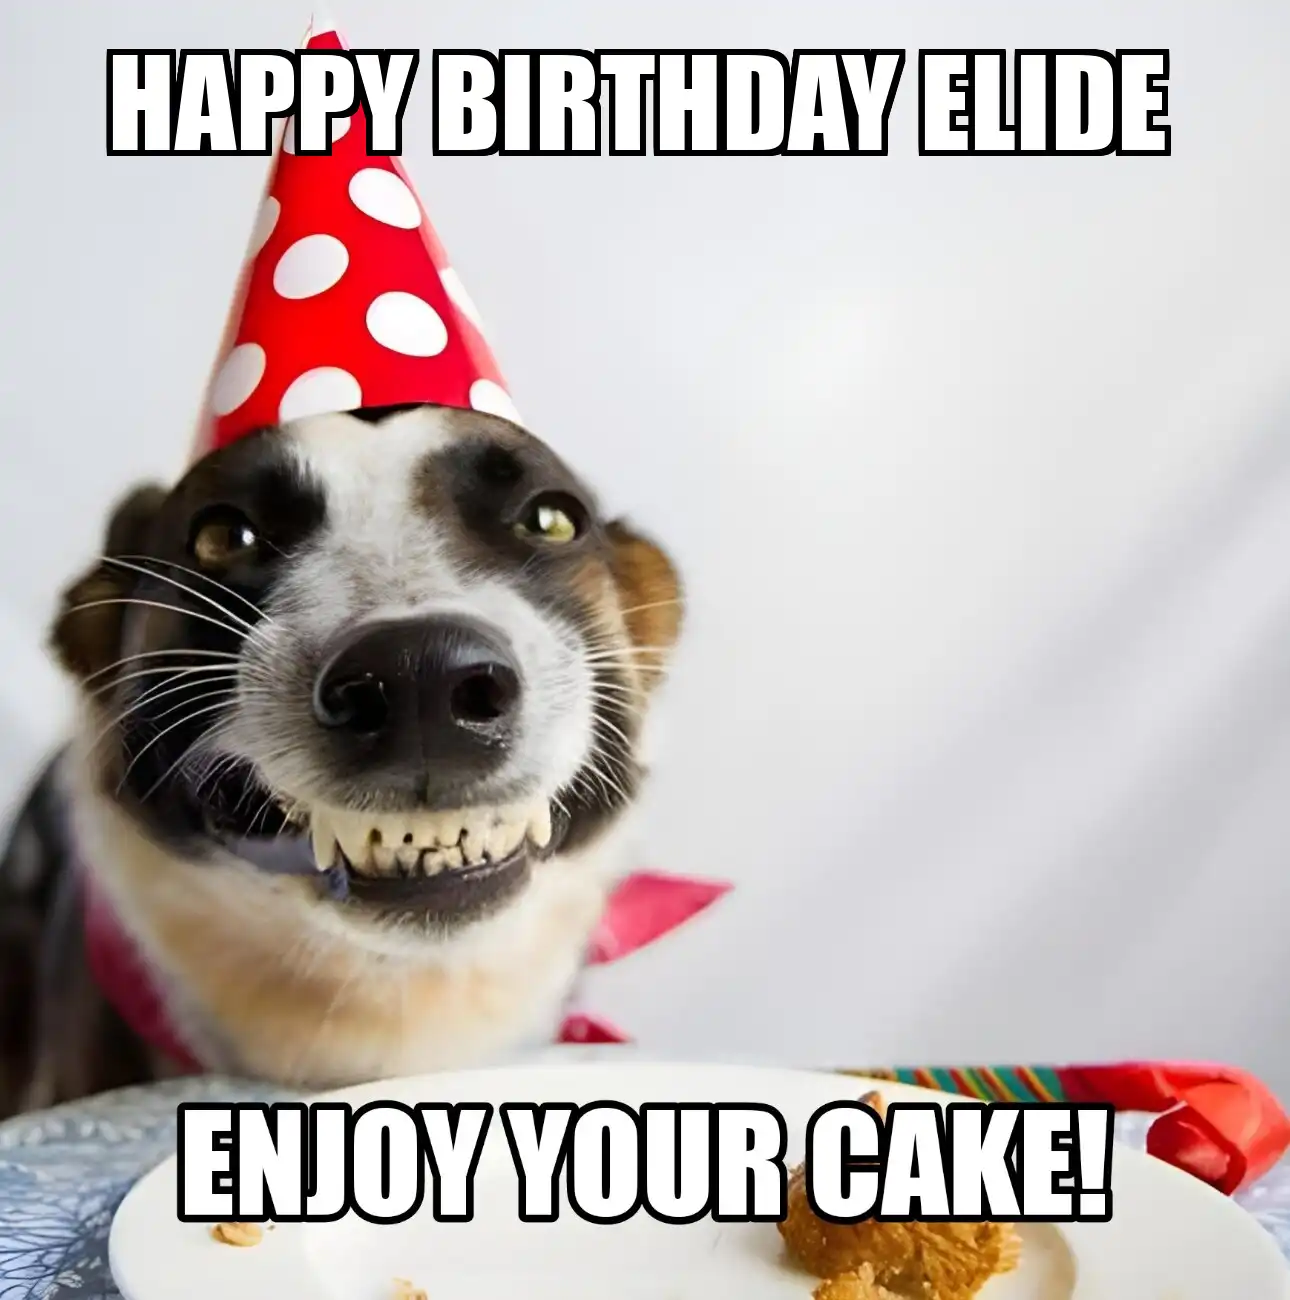 Happy Birthday Elide Enjoy Your Cake Dog Meme